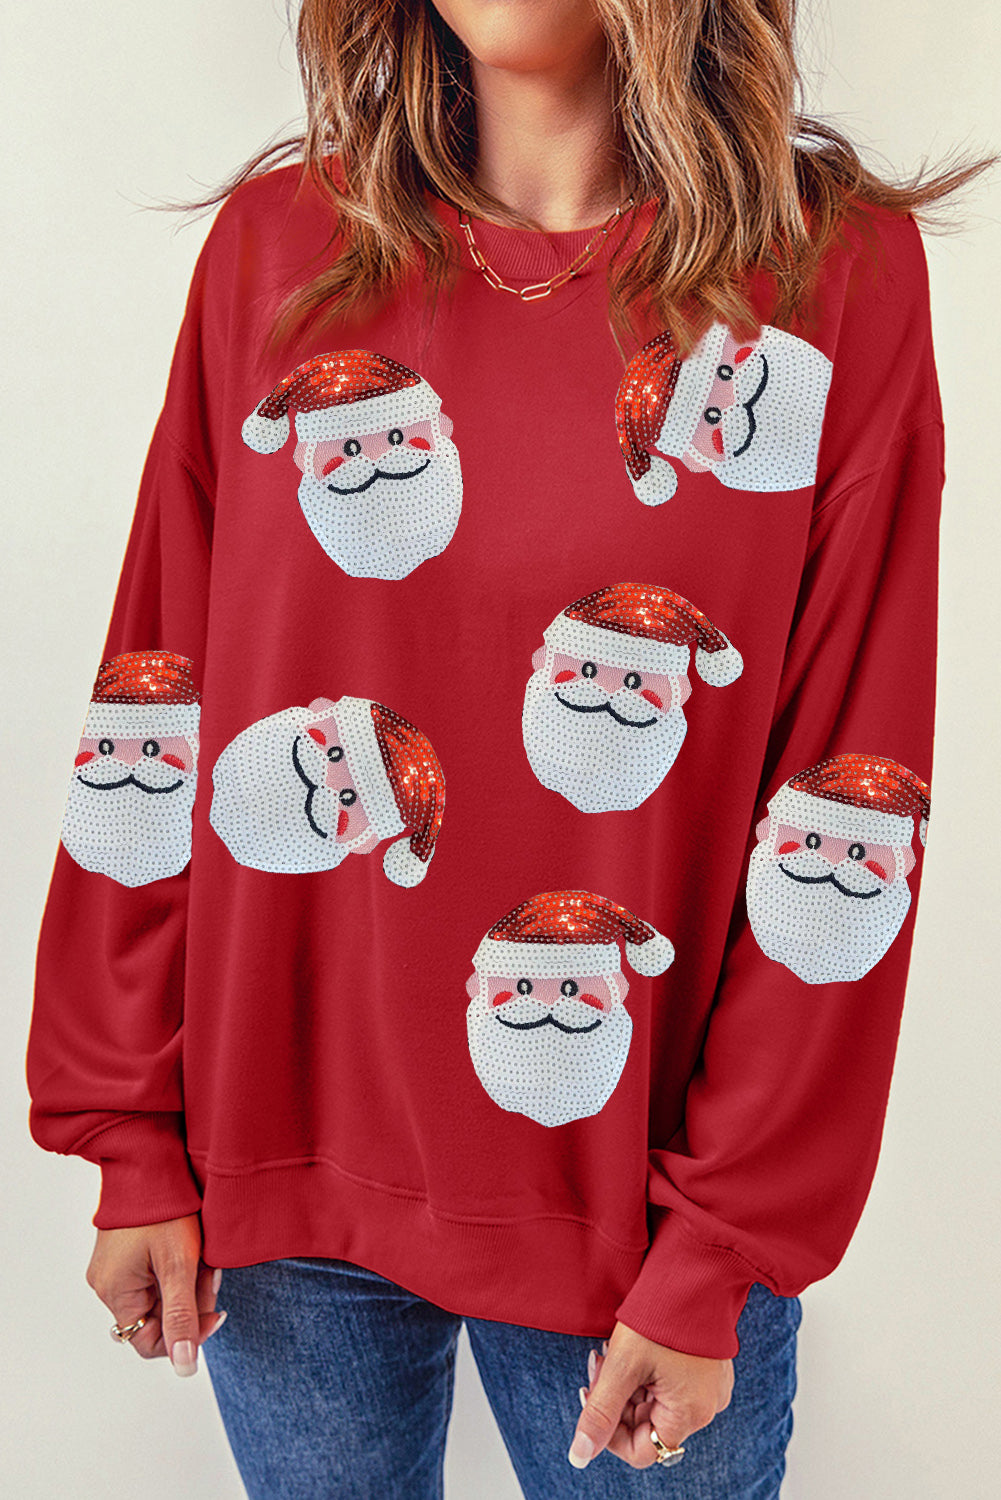 Fiery Red Santa Claus Sequin Graphic Sweatshirt